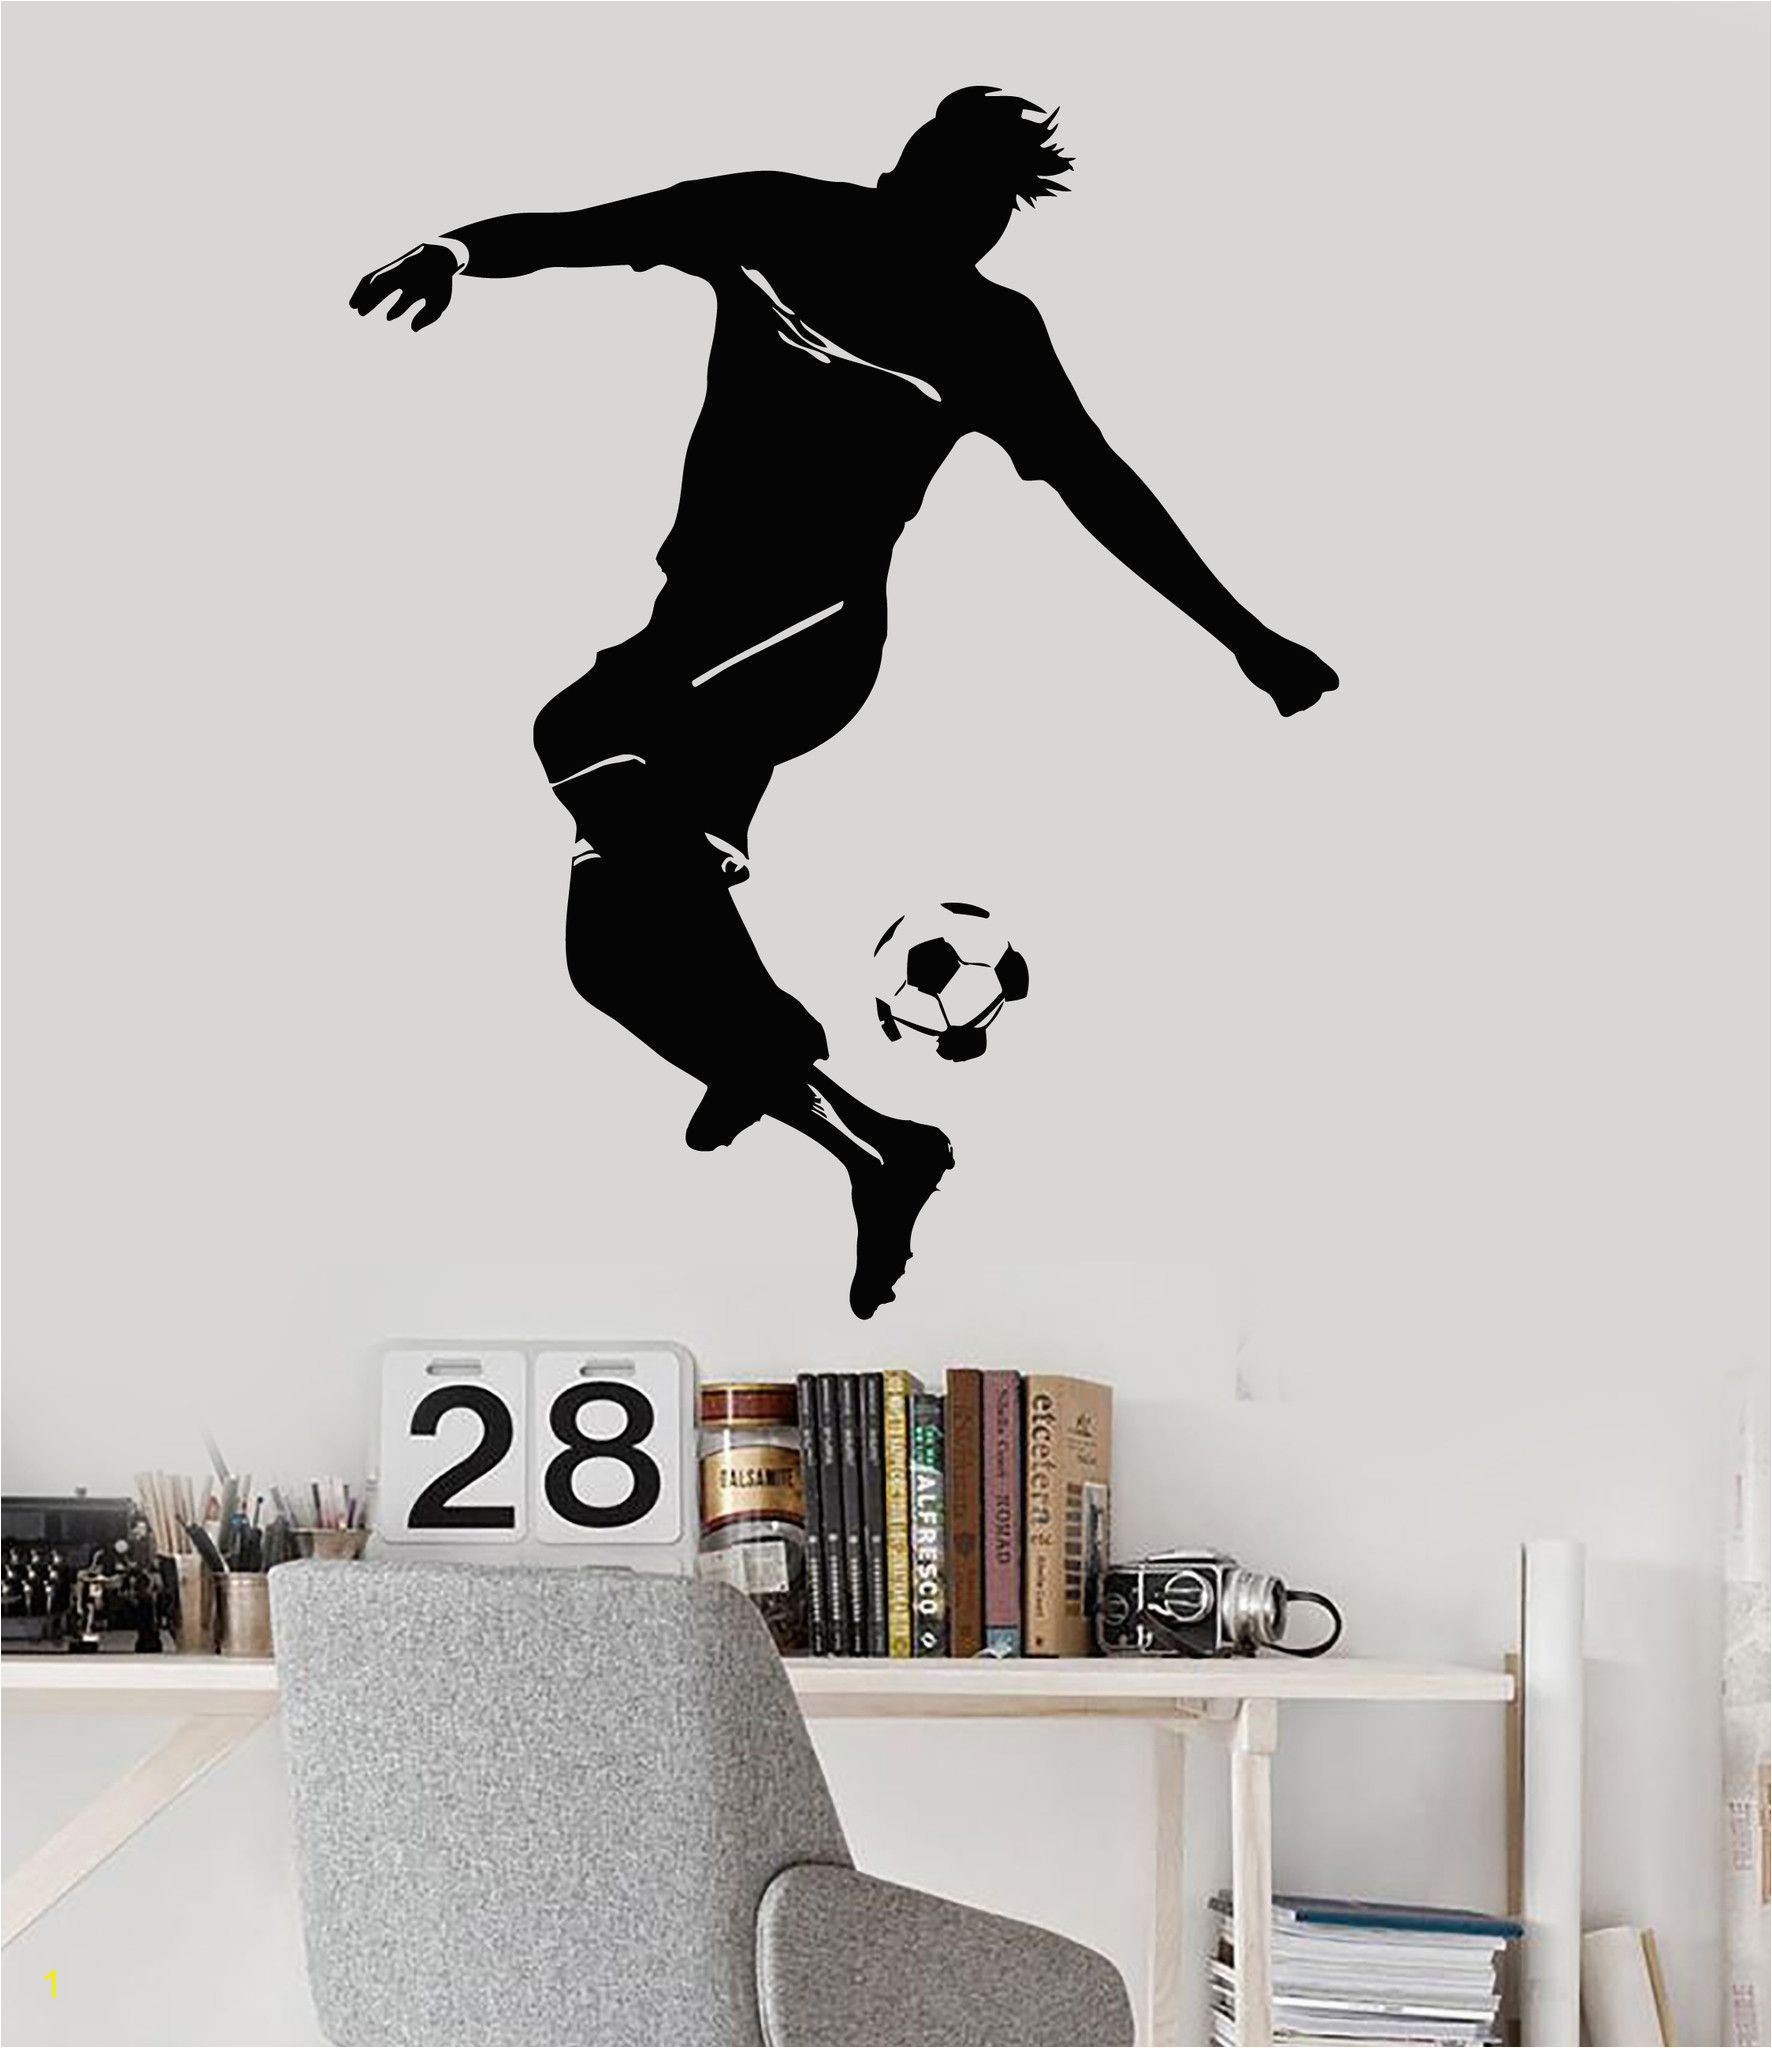 Soccer Wall Mural Decals Vinyl Wall Decal soccer Player Ball Boys Room Sports Stickers Murals